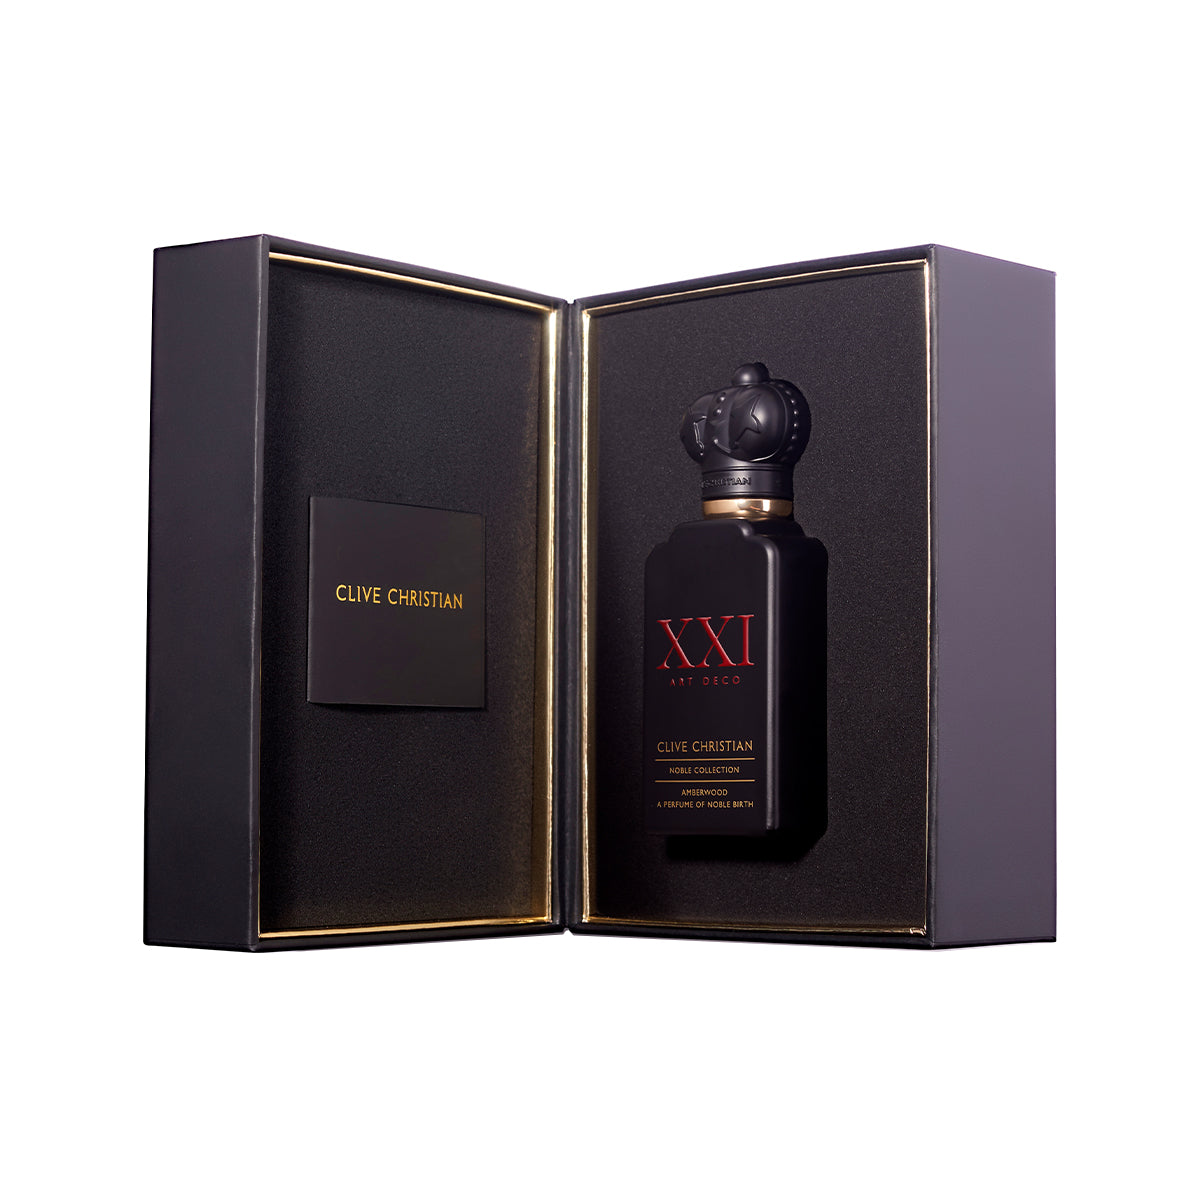 XXI Art Deco Amberwood - Clive Christian - Parfum 50 ml